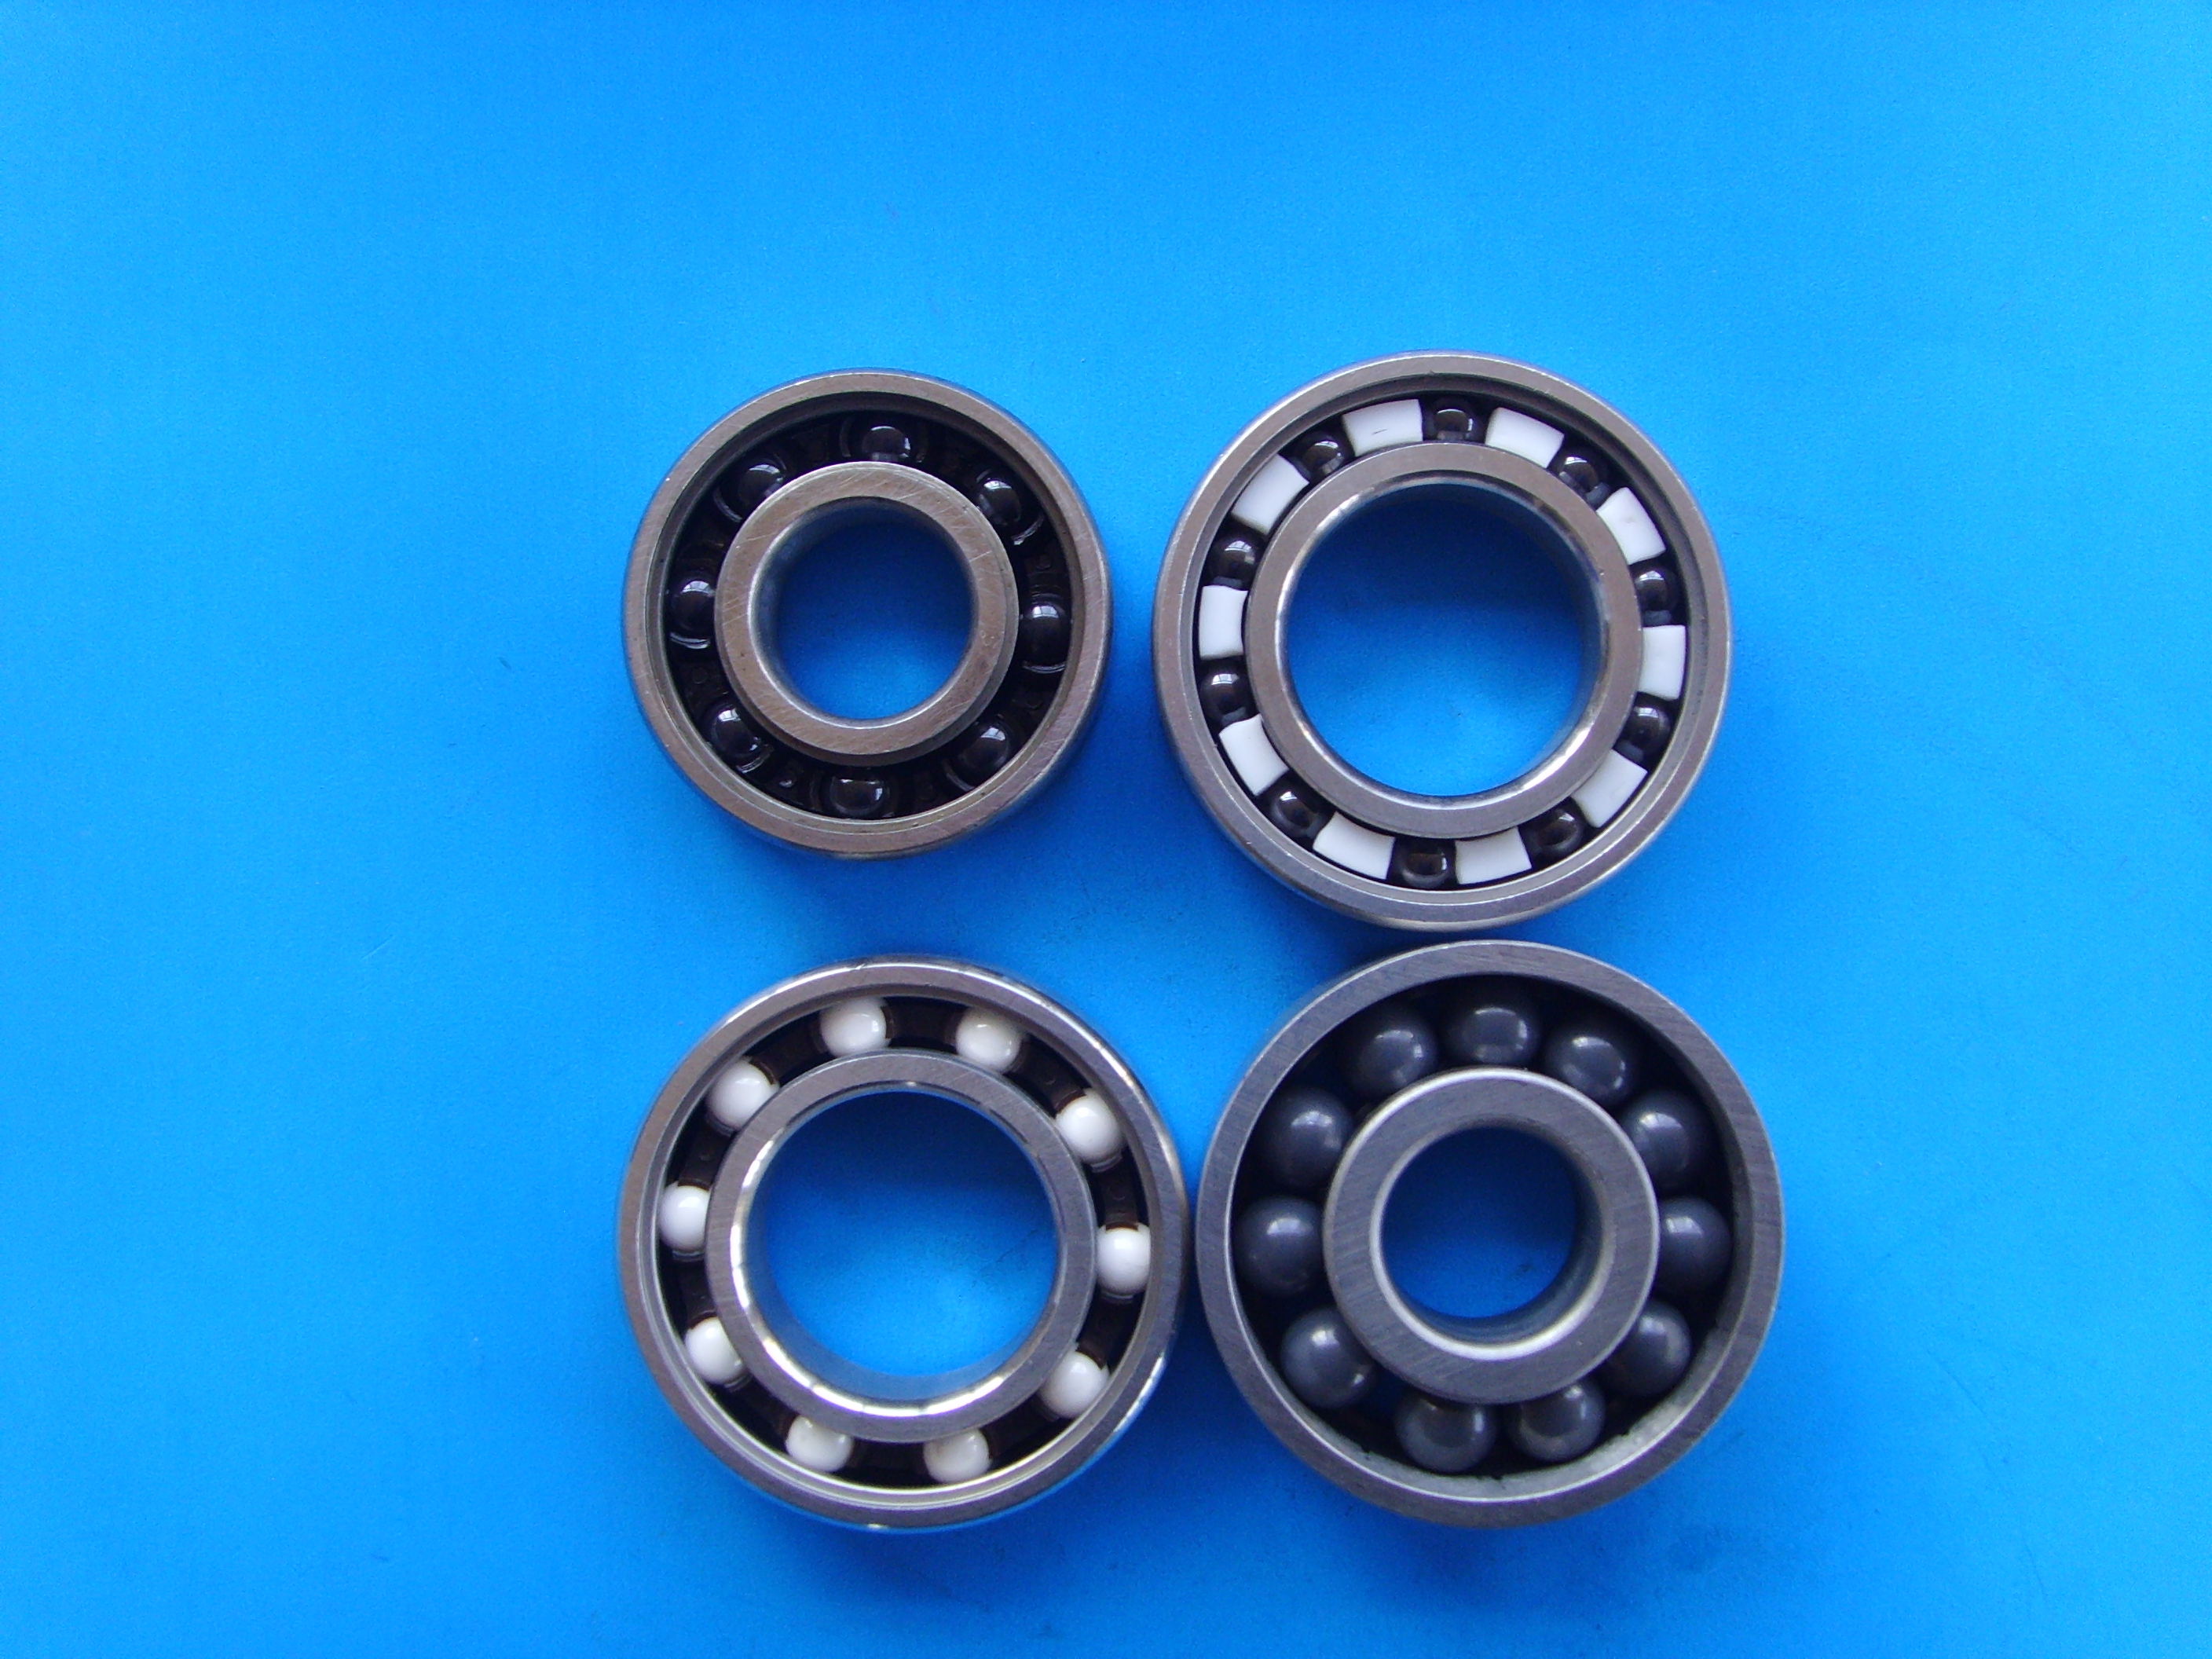 SiC full ball ceramic bearings